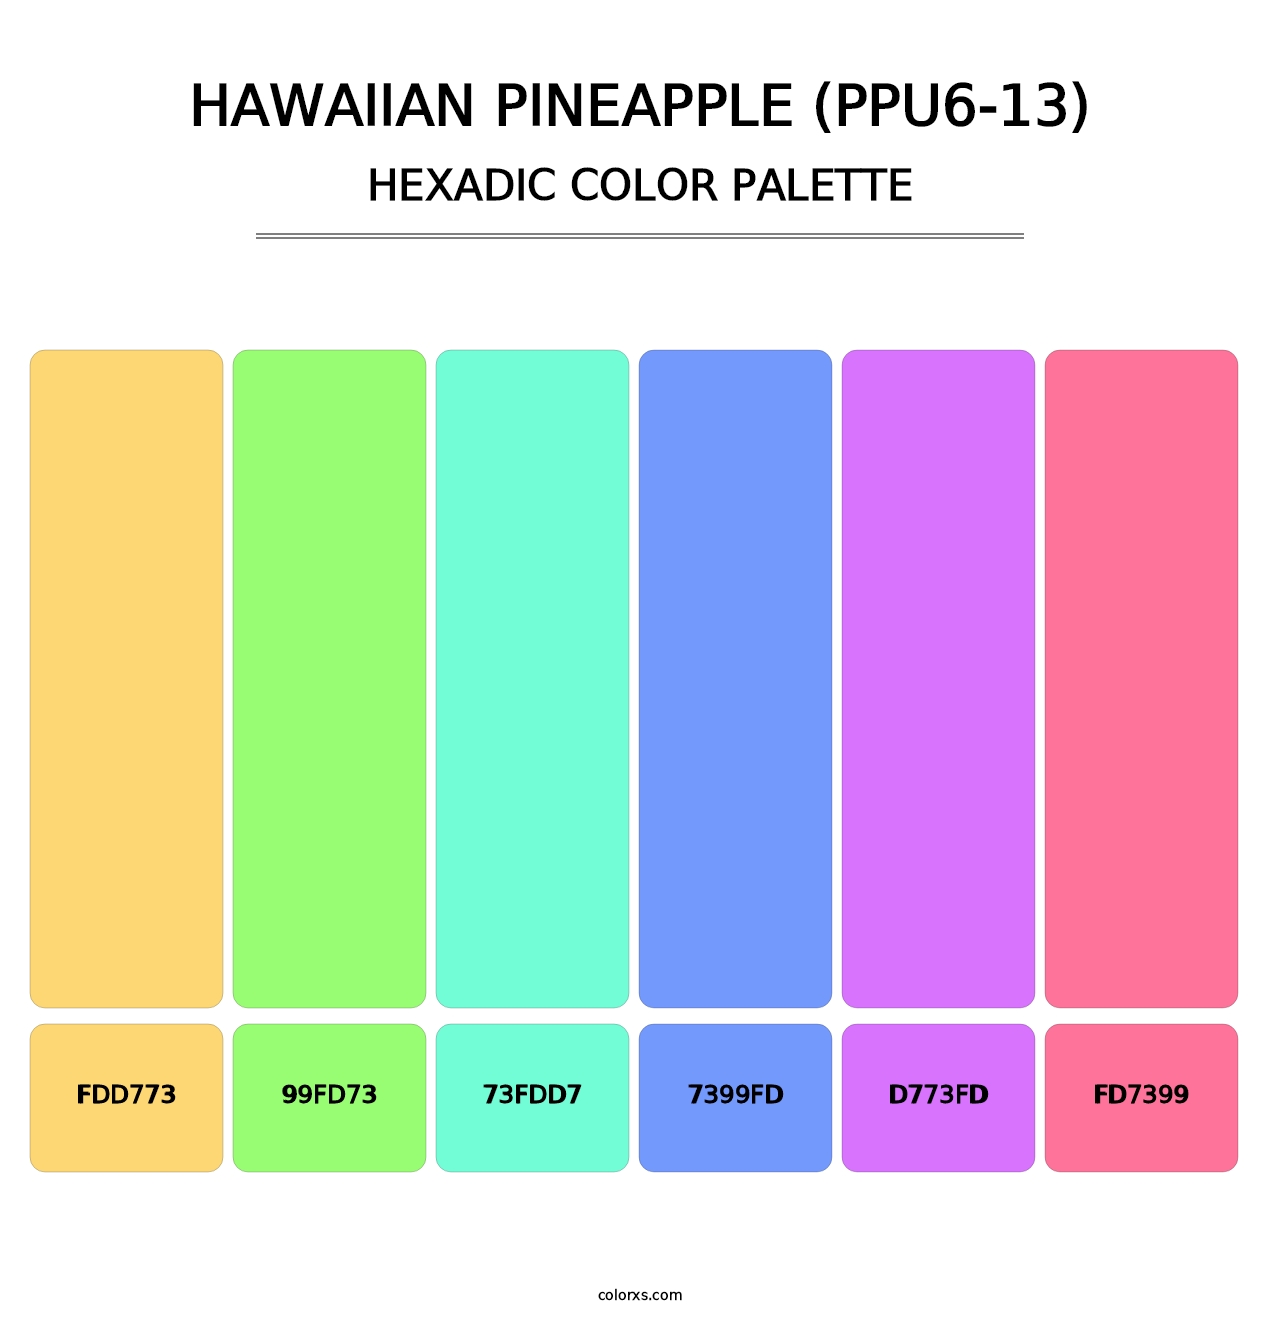 Hawaiian Pineapple (PPU6-13) - Hexadic Color Palette